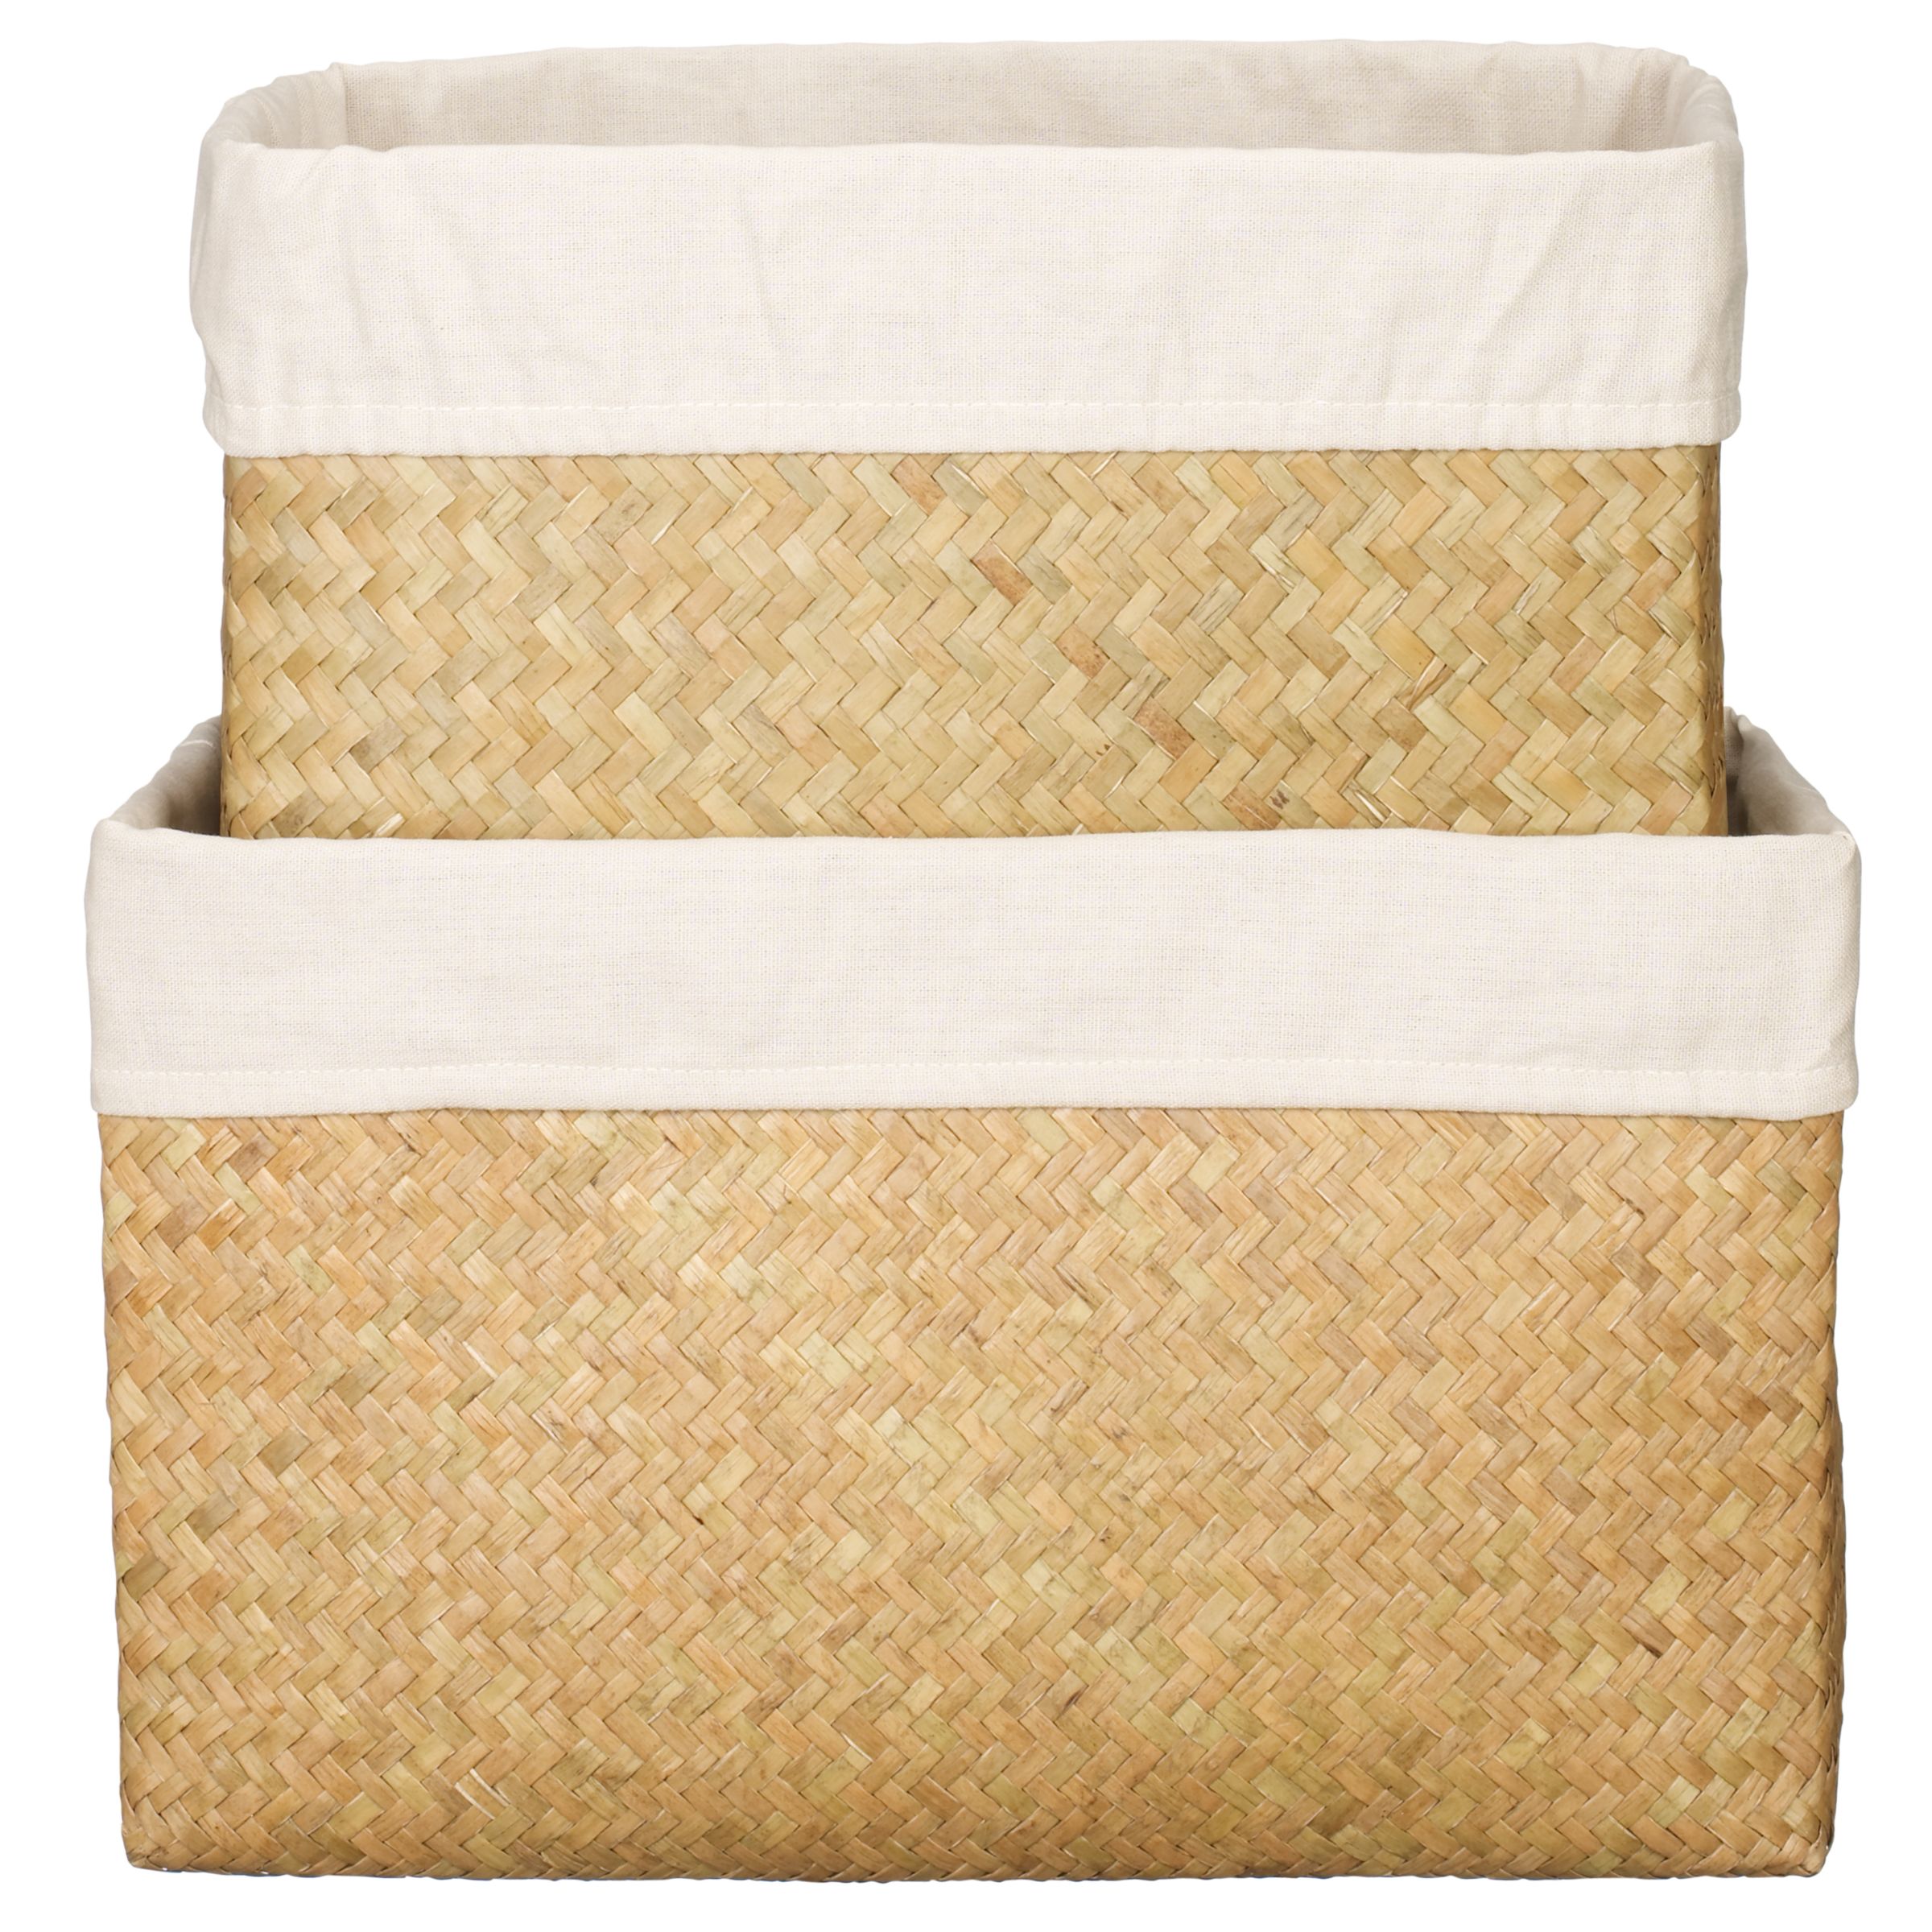 Seagrass Linen Basket, Set of 2